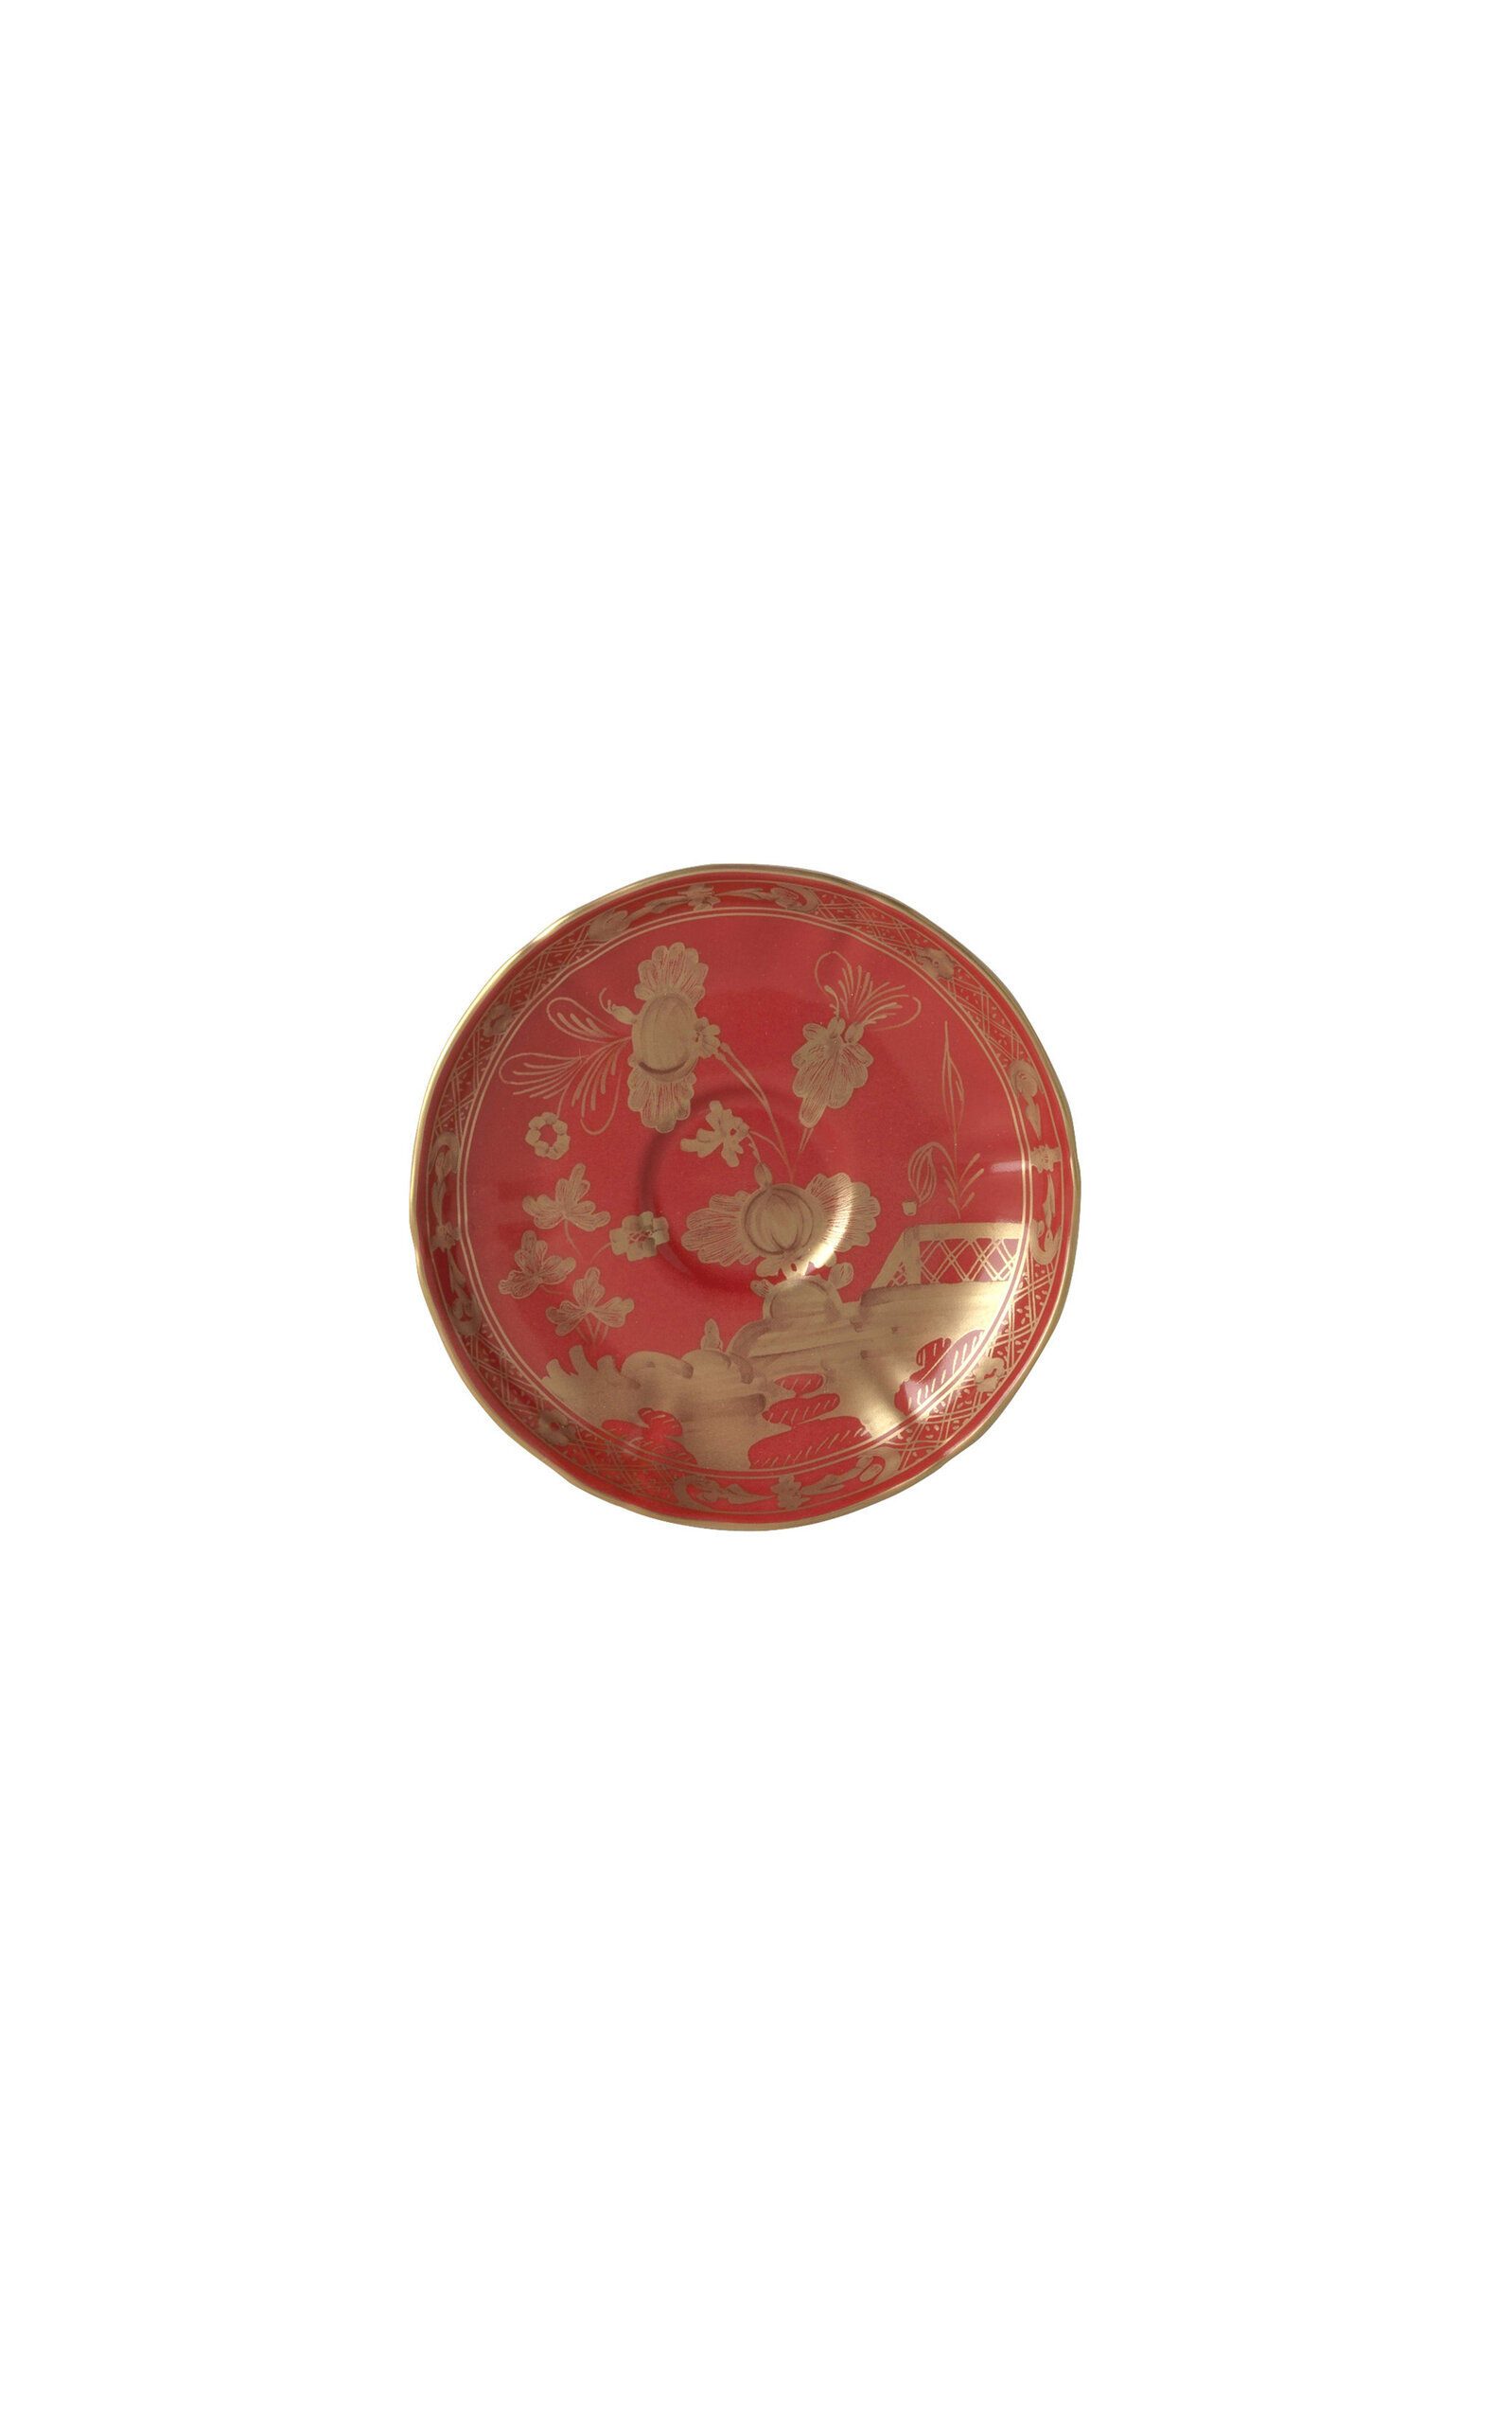 Ginori 1735 Antico Doccia Porcelain Coffee Saucer In Red